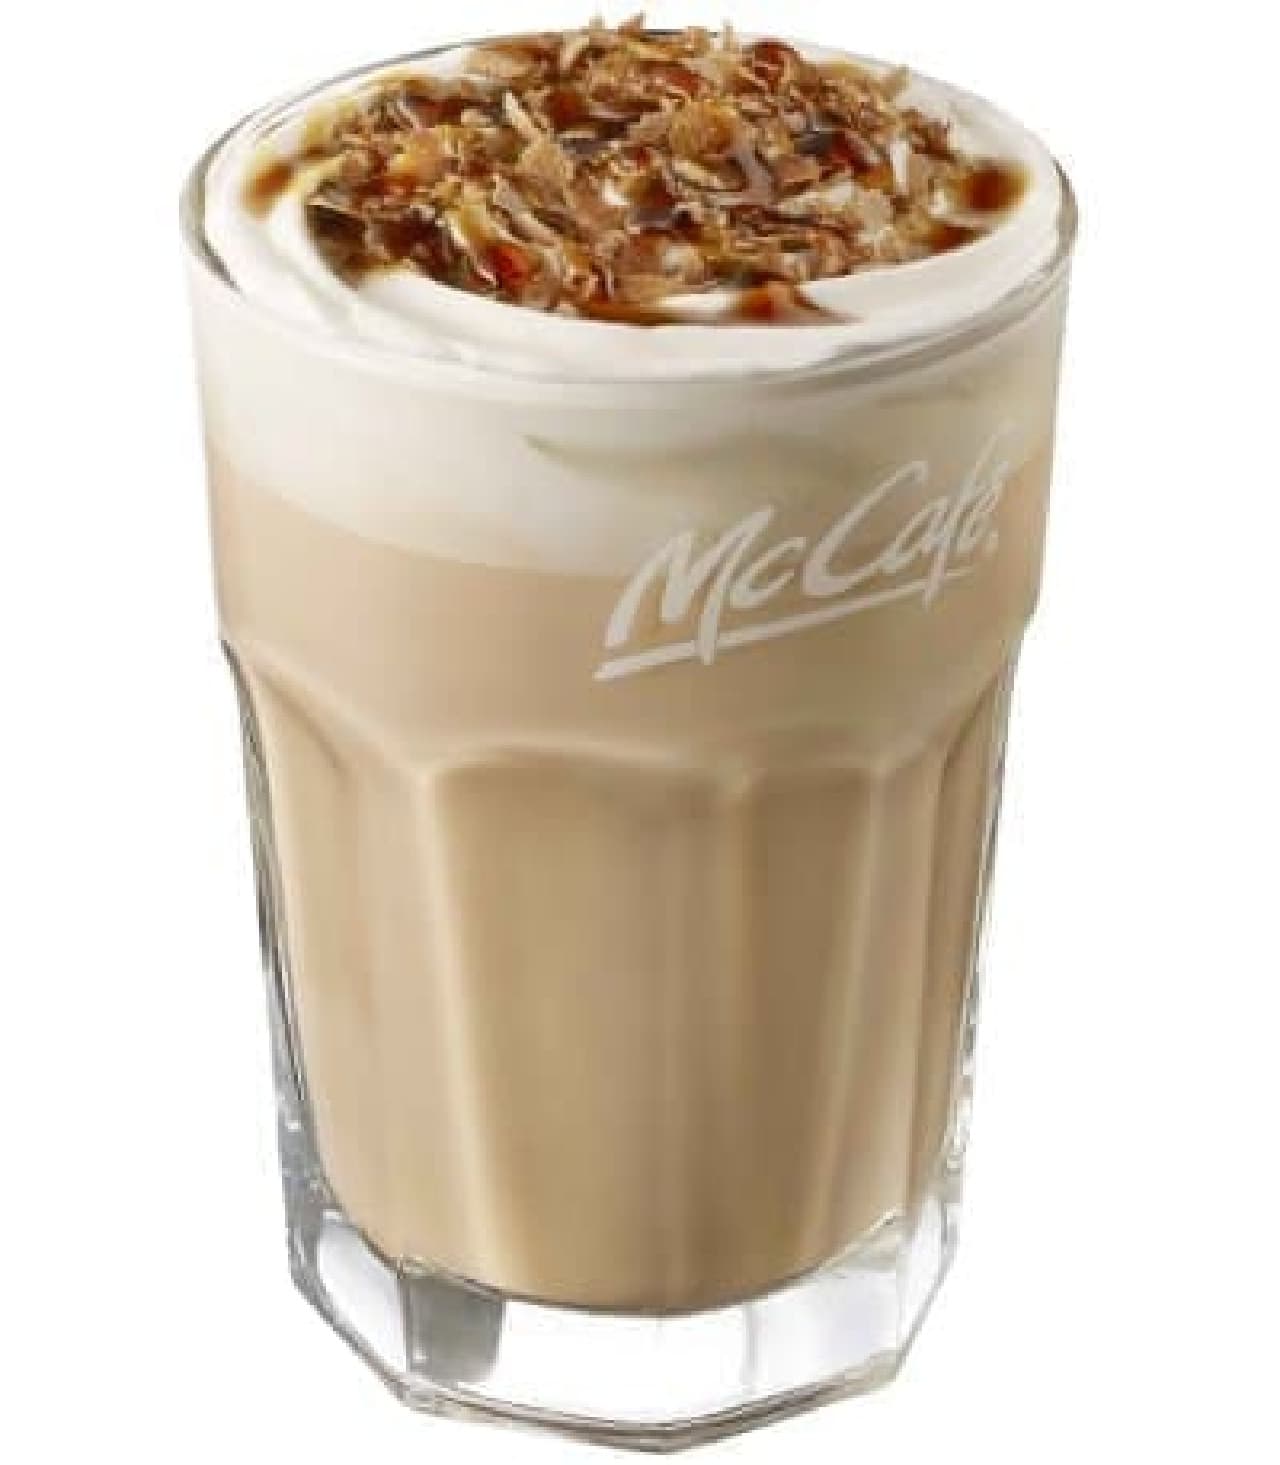 McCafé "Creme Brulee Latte"